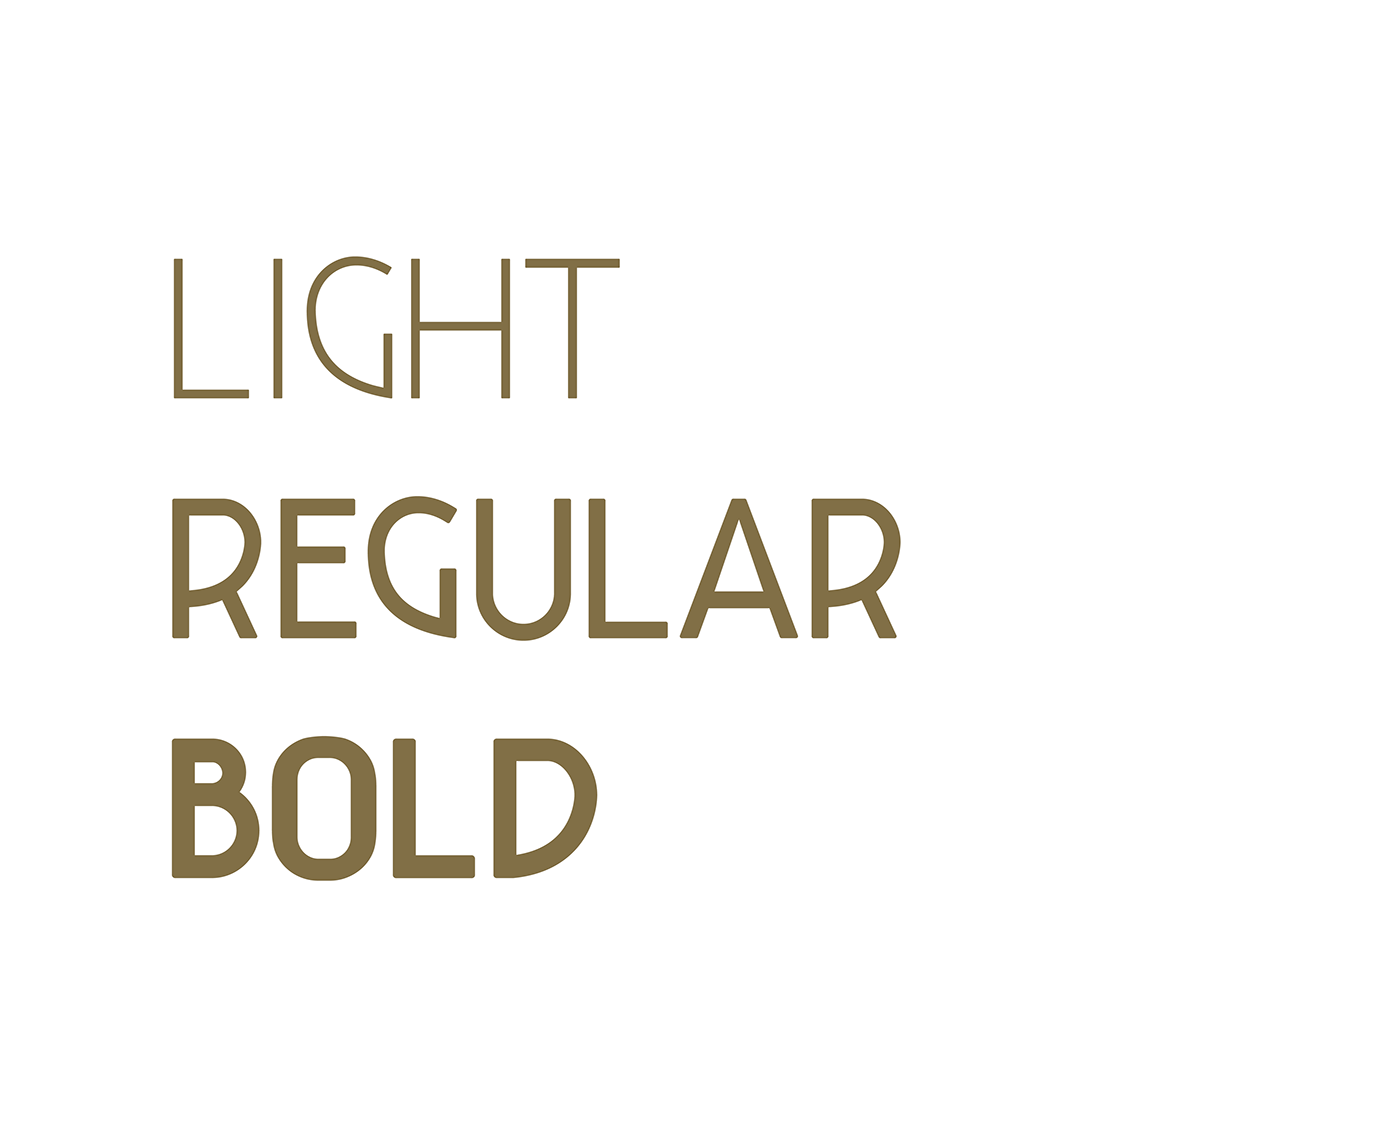 Typeface typography   parmigiano Reggiano branding  graphic design  font sans serif